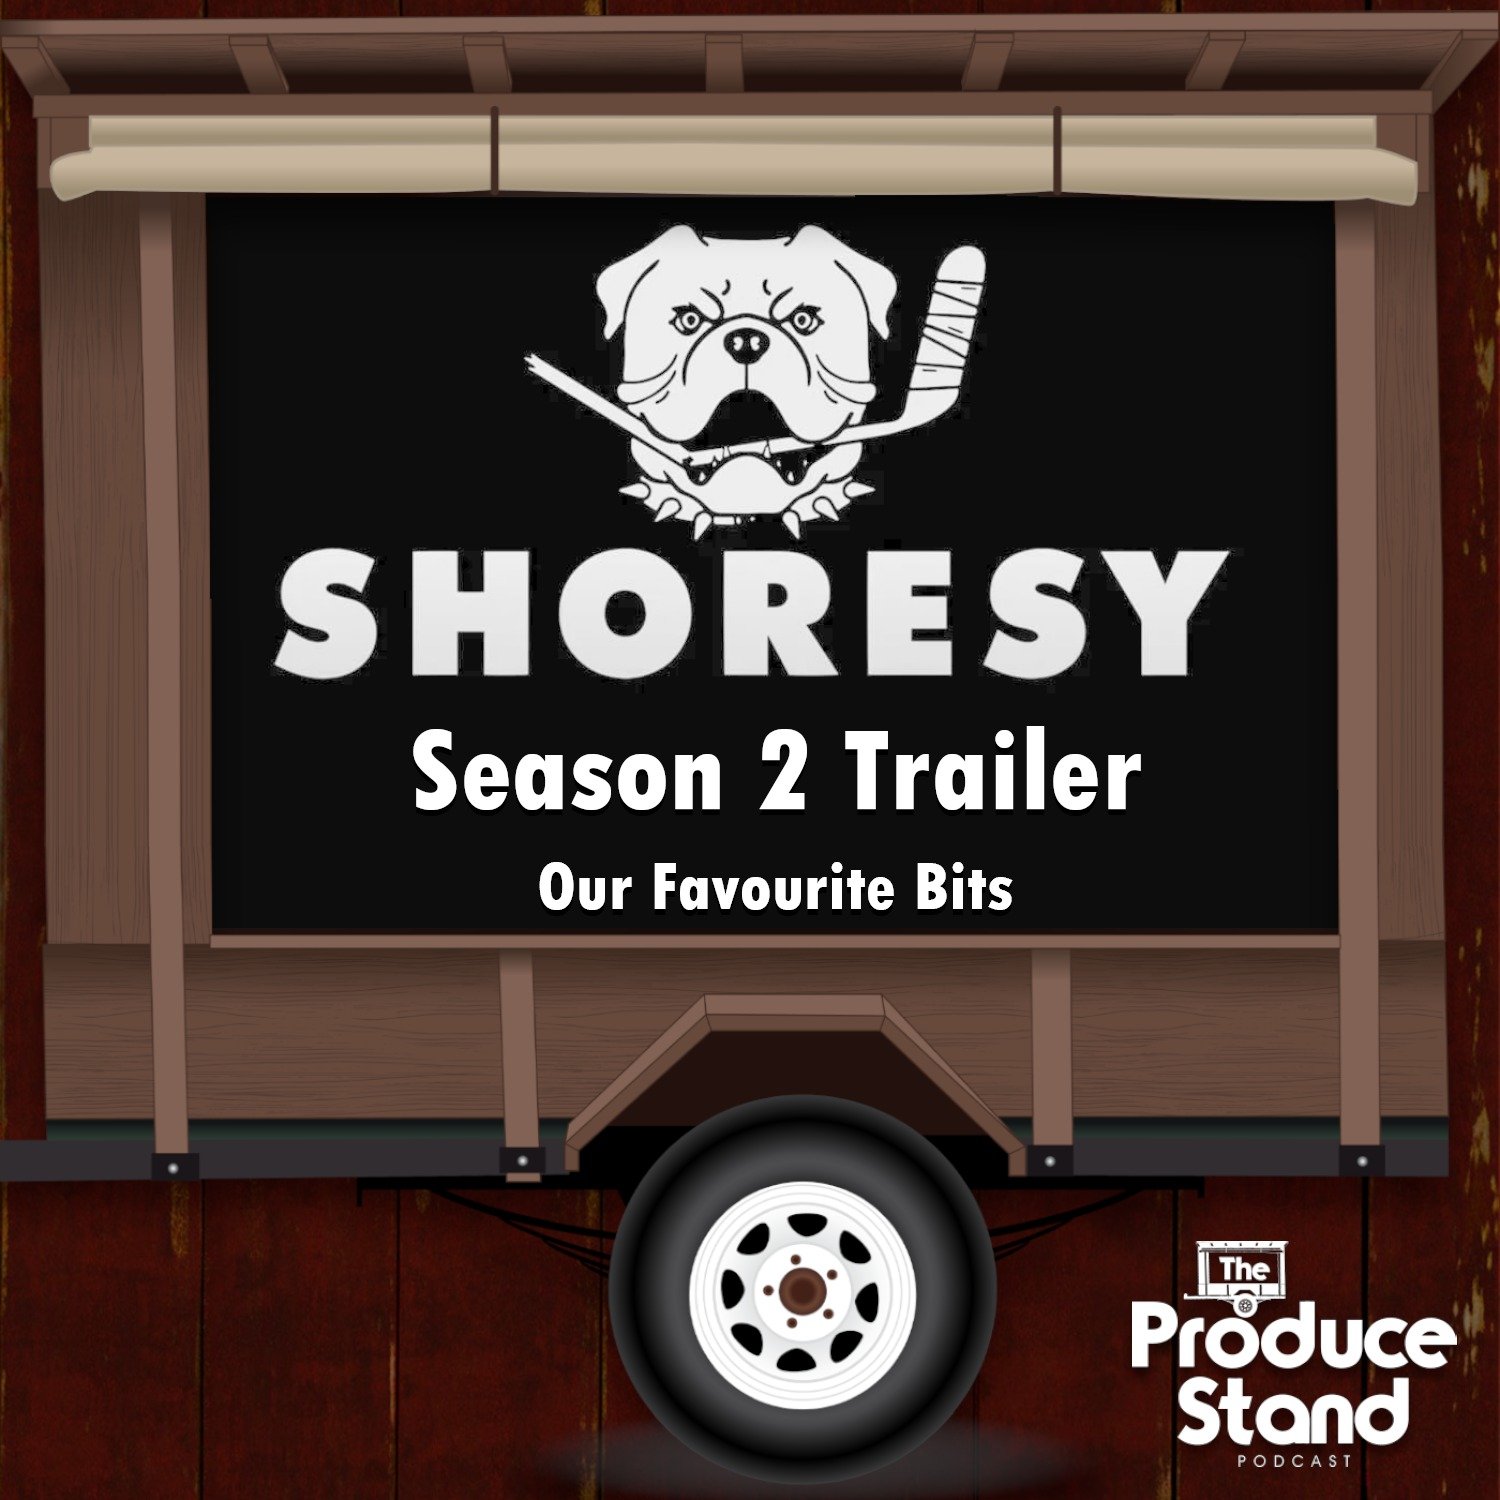 Episode cover art for TPS218: Season 2 Trailer (Shoresy)